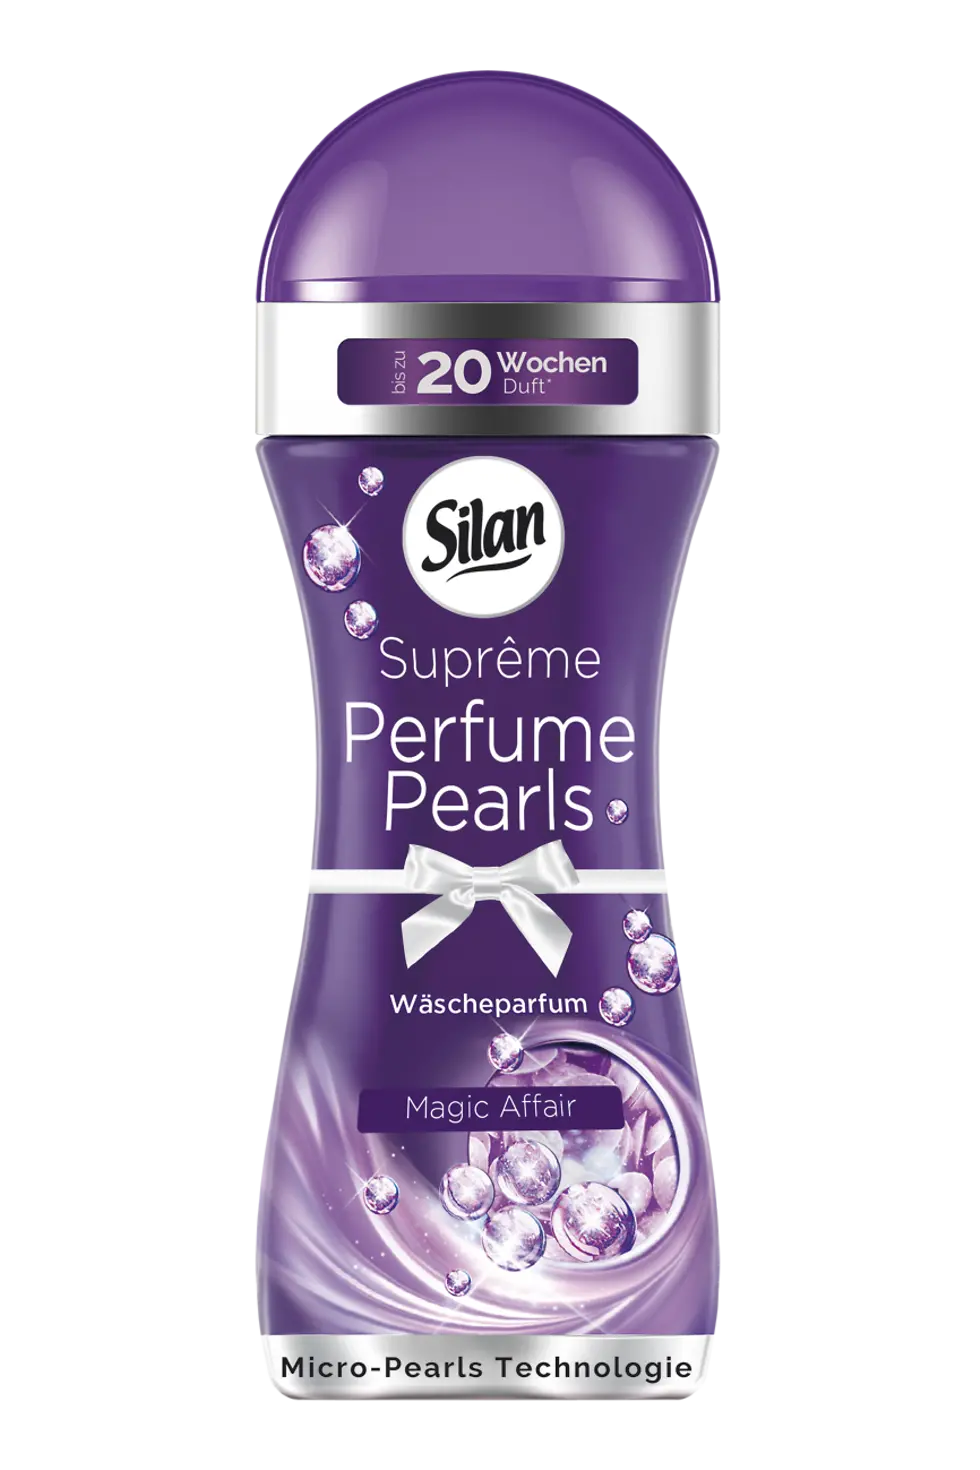 Silan Suprême Perfume Pearls